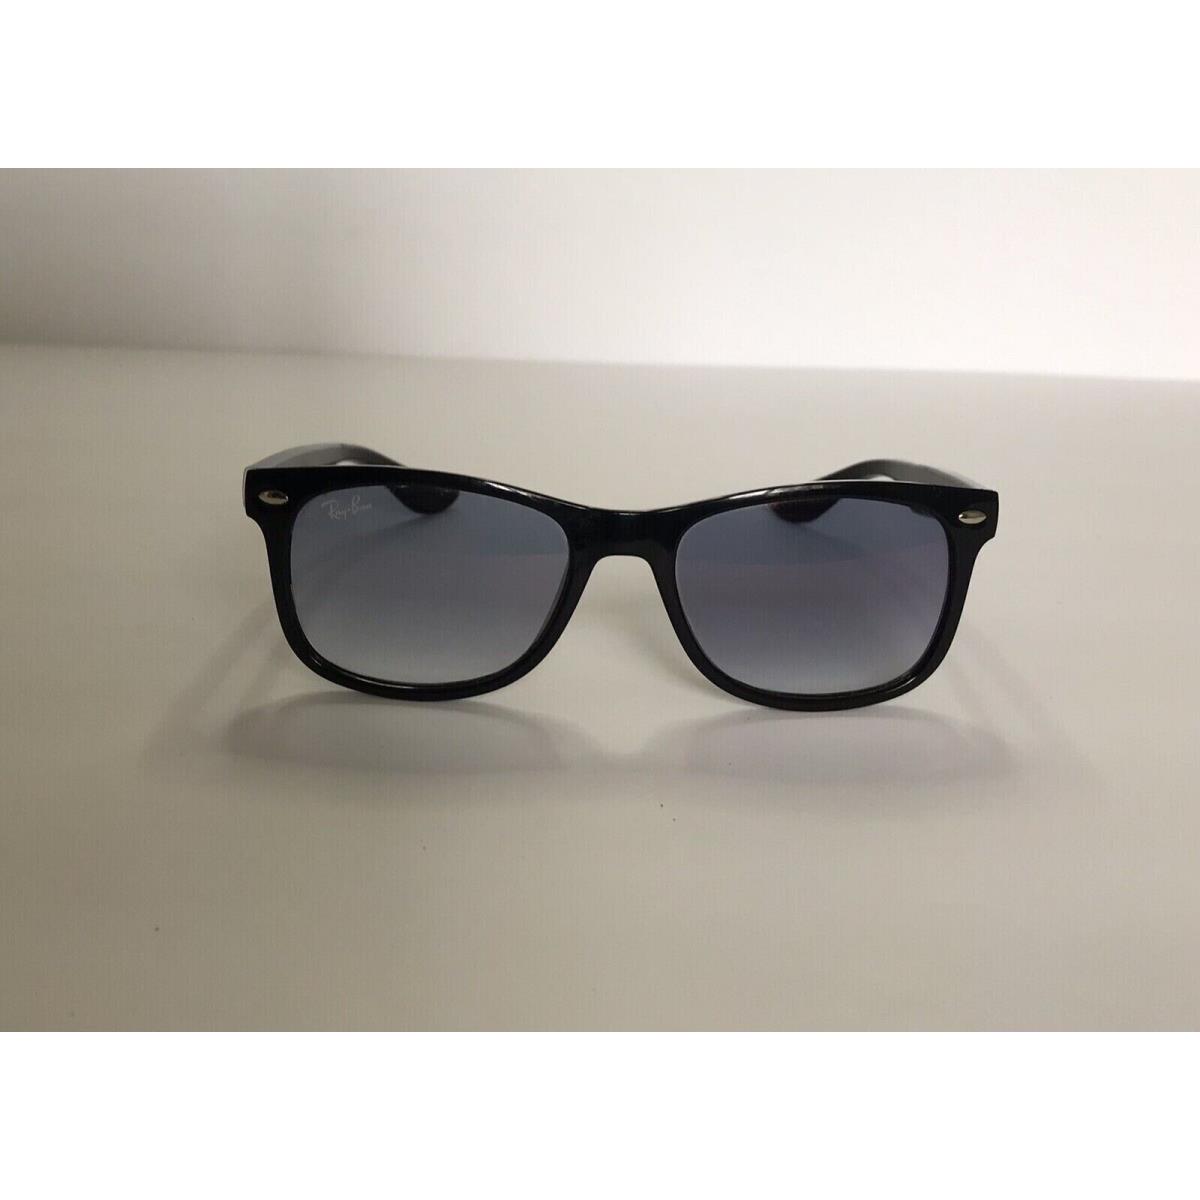 Ray-Ban sunglasses  - Black Frame